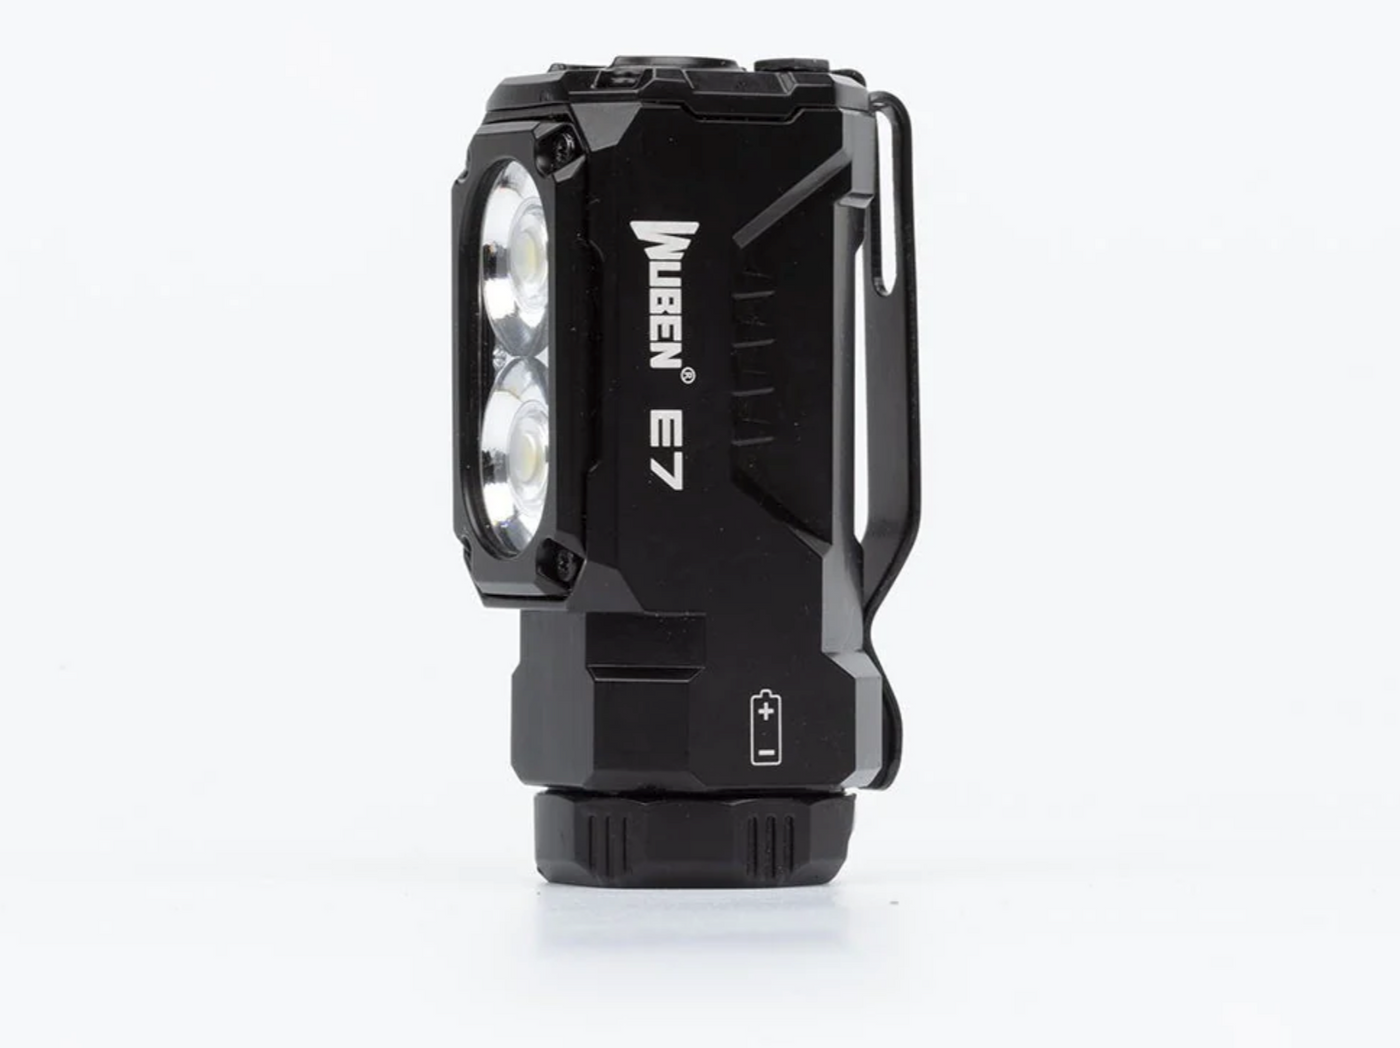 E7 Dual Emitter - Easy Carry Light ( Ultra Compact ) Wuben®